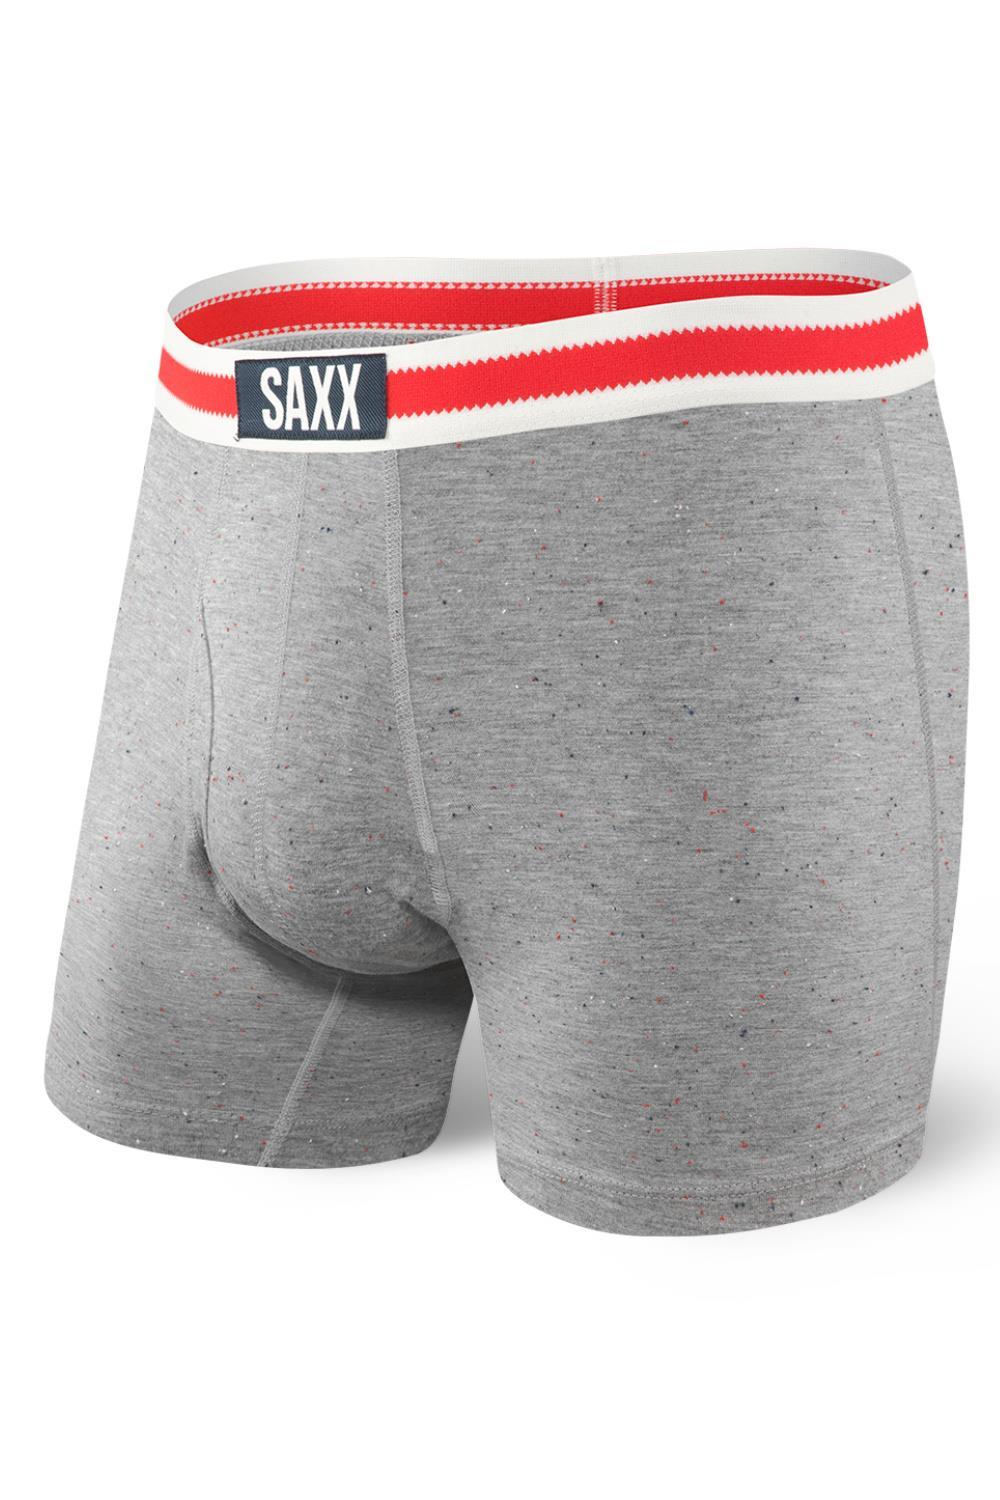 Saxx-Caleçon Ultra SXBB30F-GSM boxer – Sport & Chic